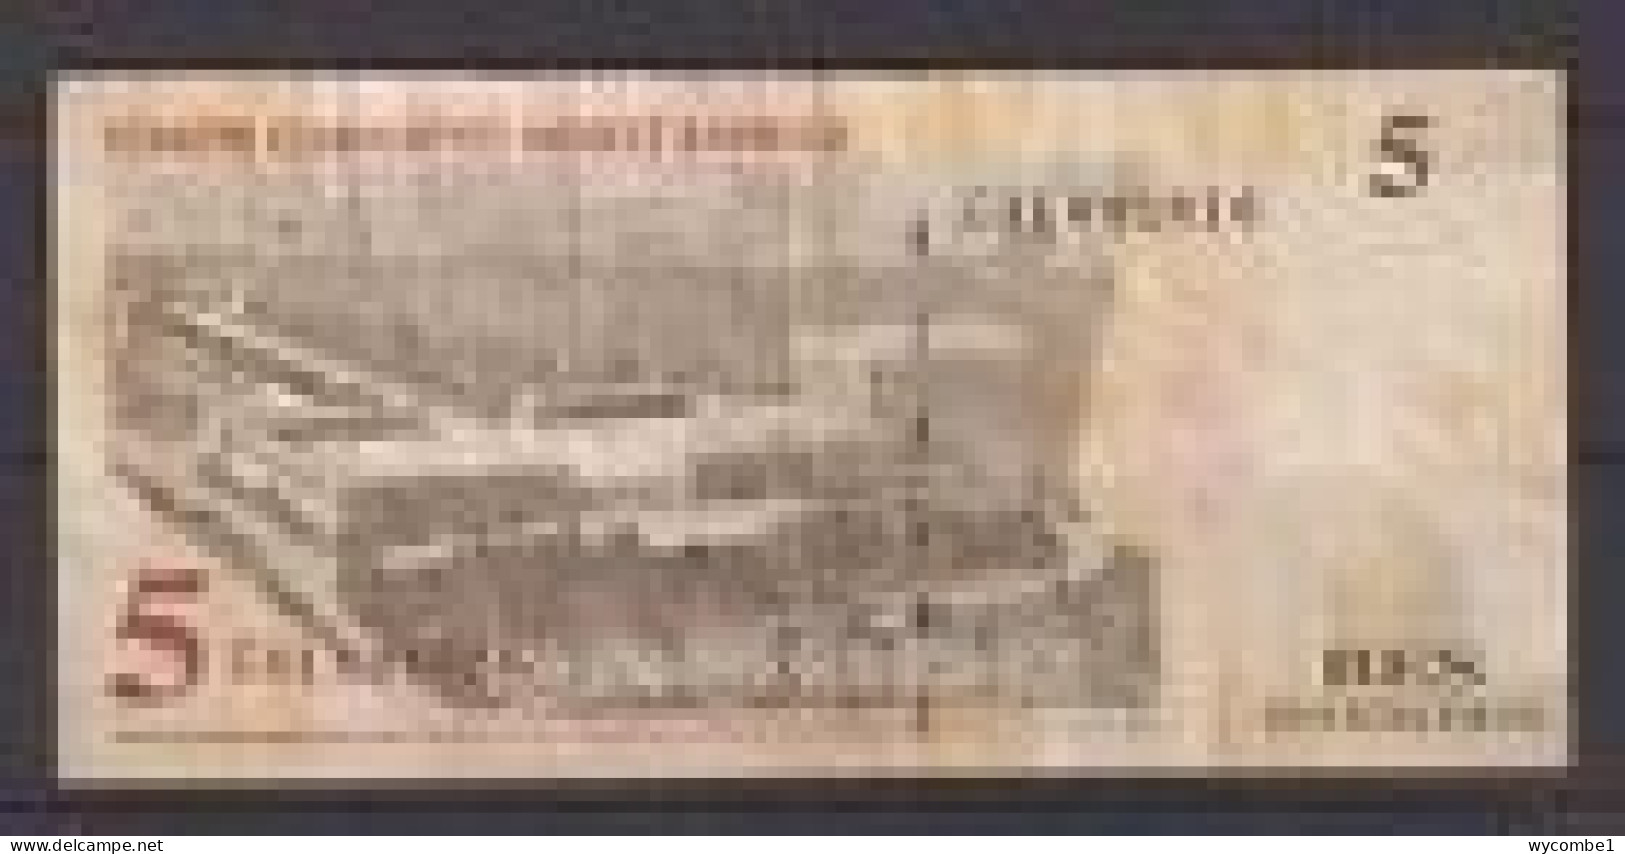 TURKEY - 2005 5 Lirasi Circulated Banknote As Scans - Turquie